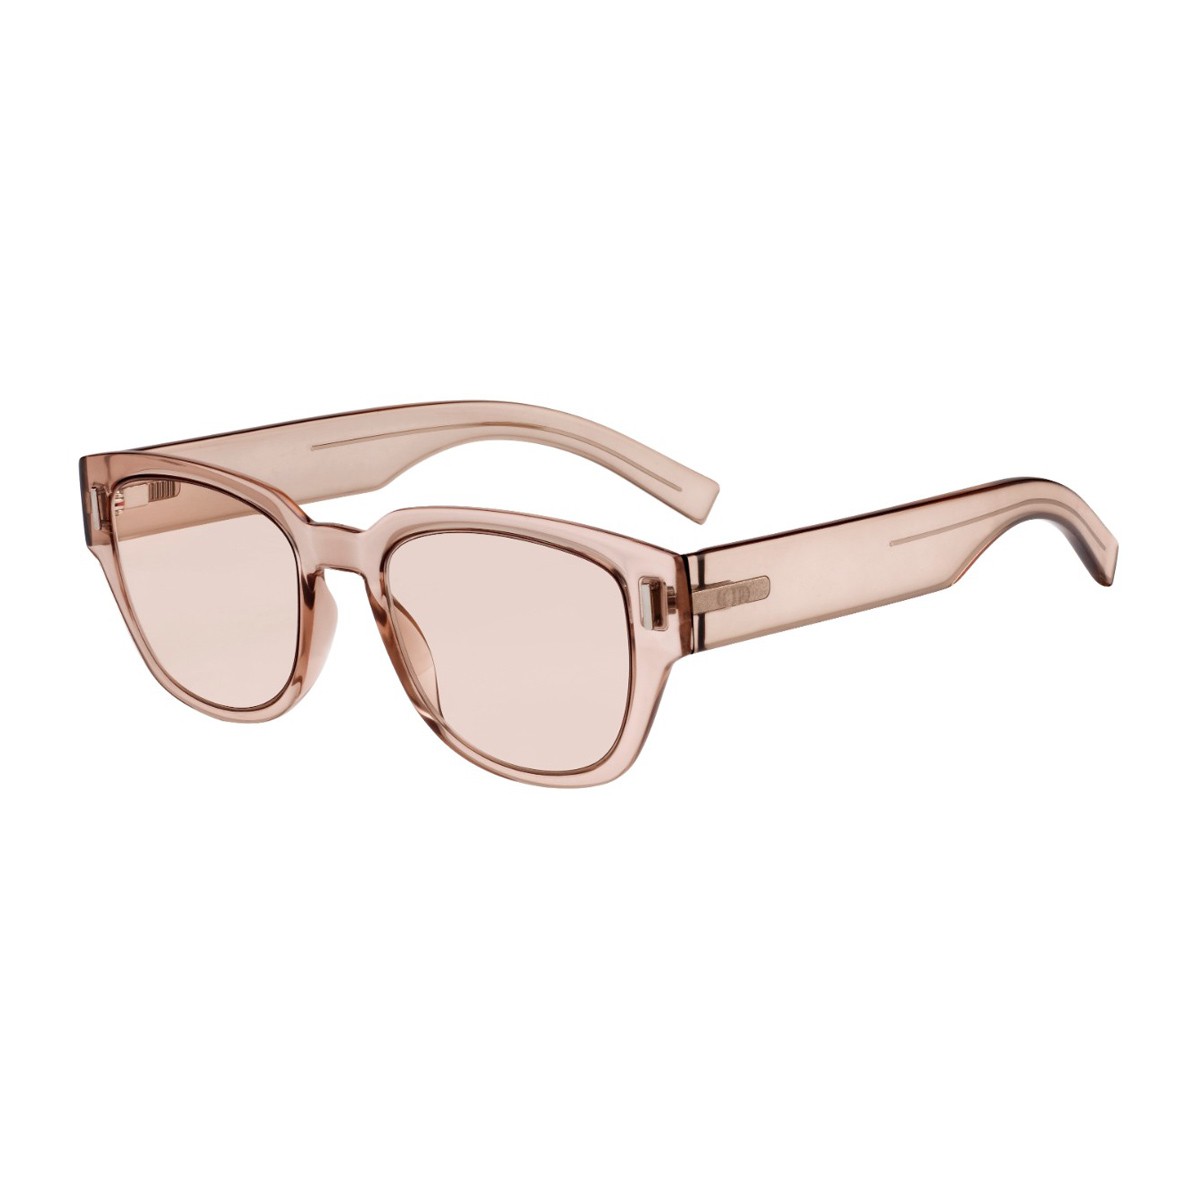 Dior Fraction 3 | Men's sunglasses